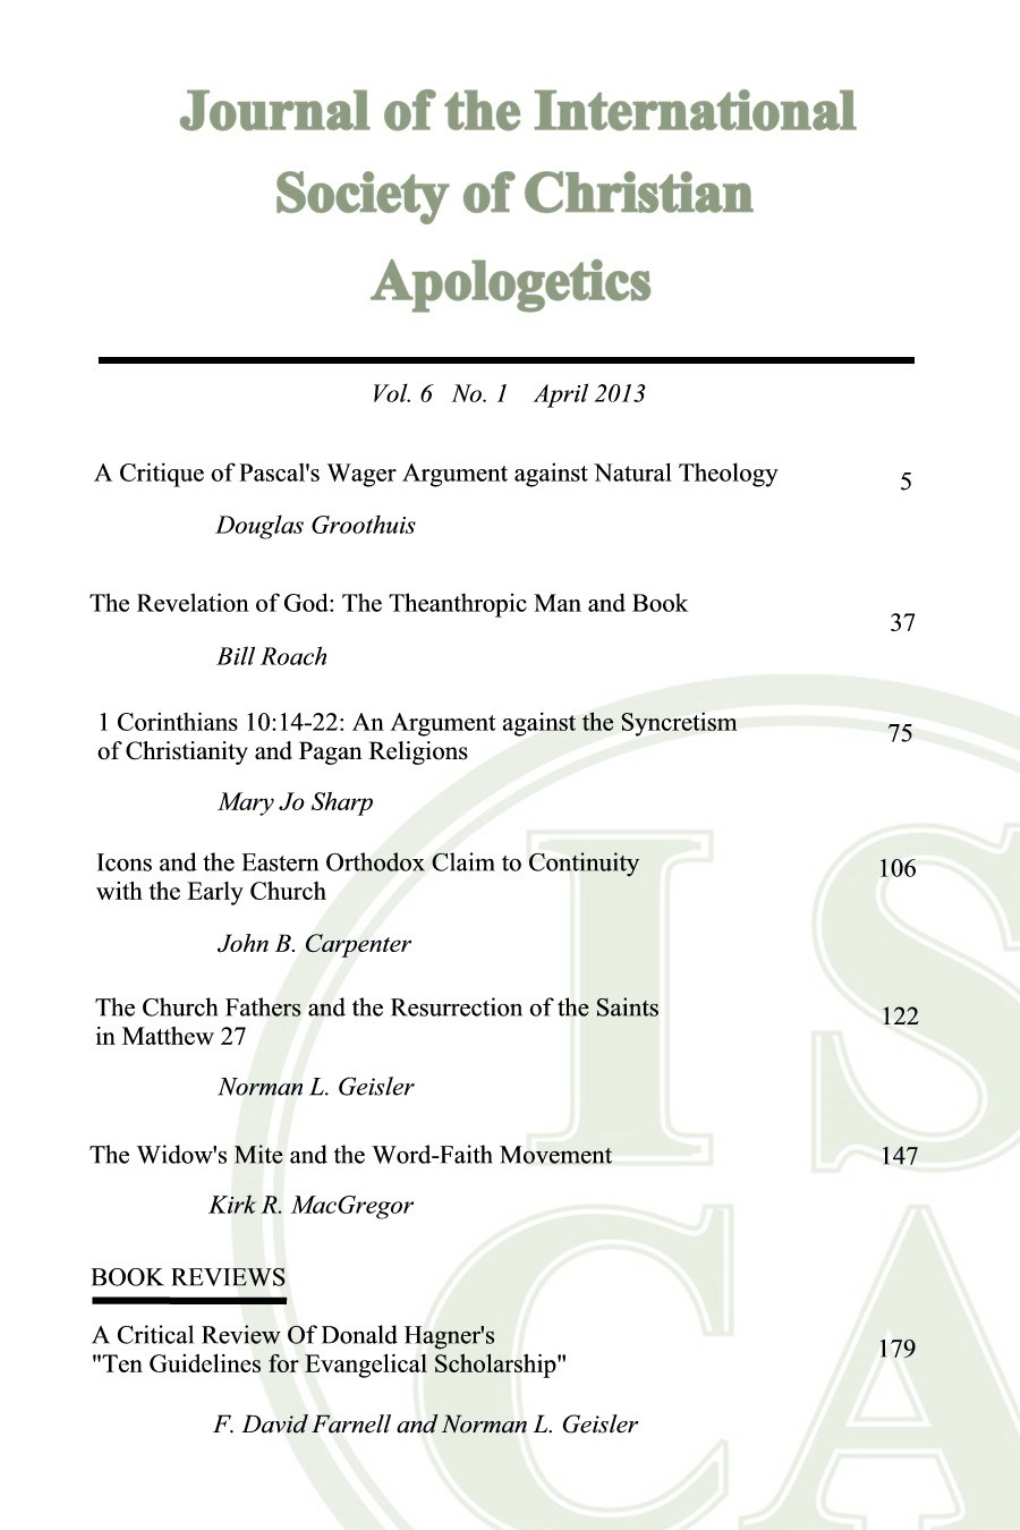 JISCA Volume 6, No. 1, April 2013